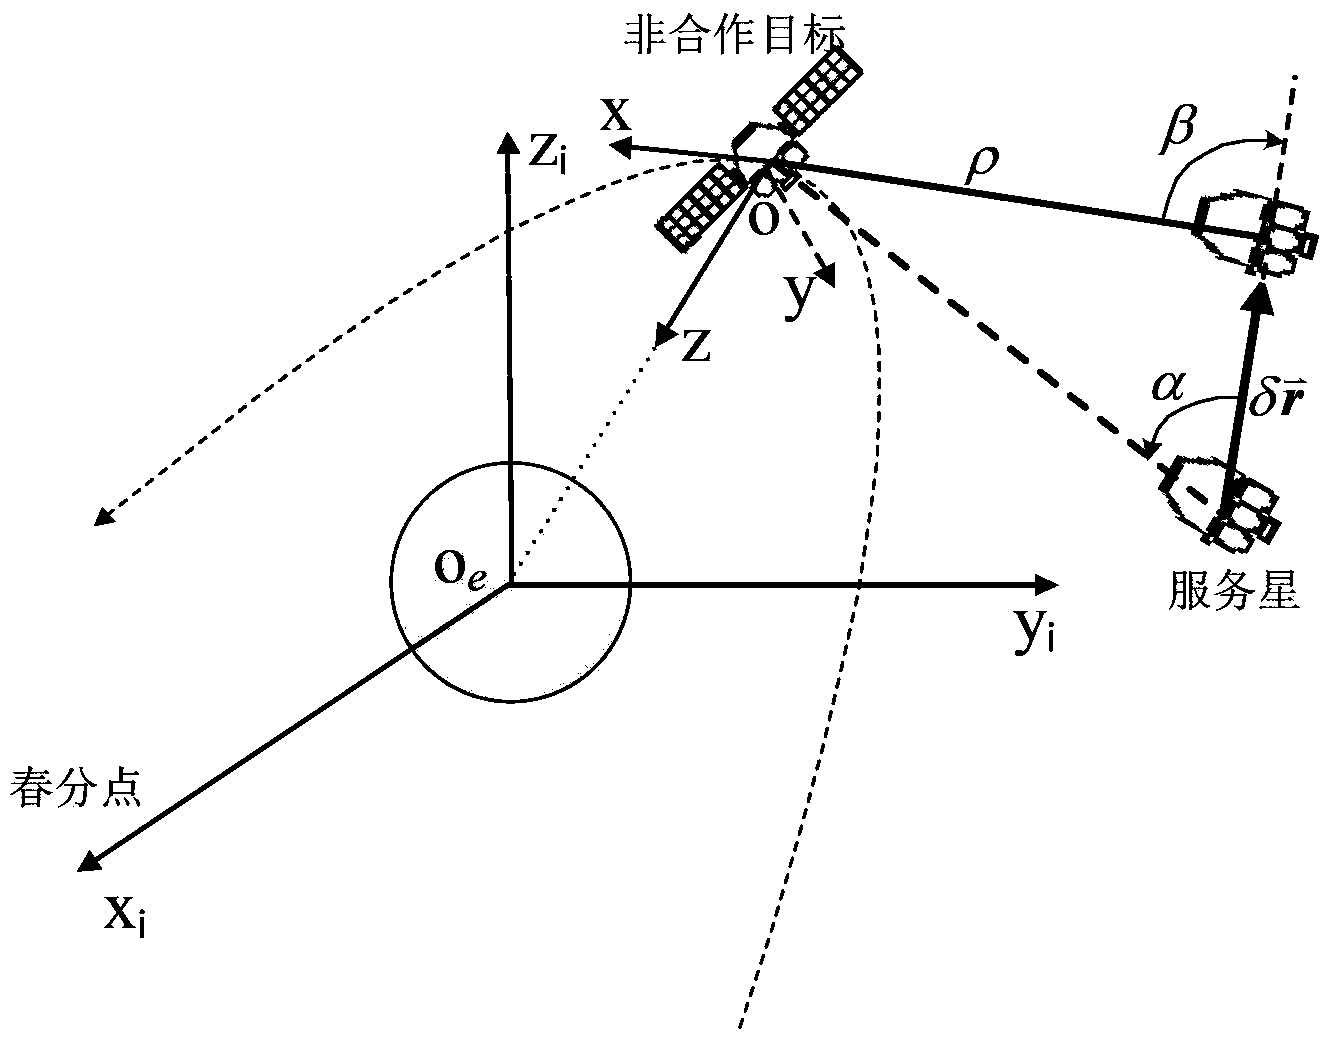 Relative navigation method for autonomous rendezvous of space non-operative target